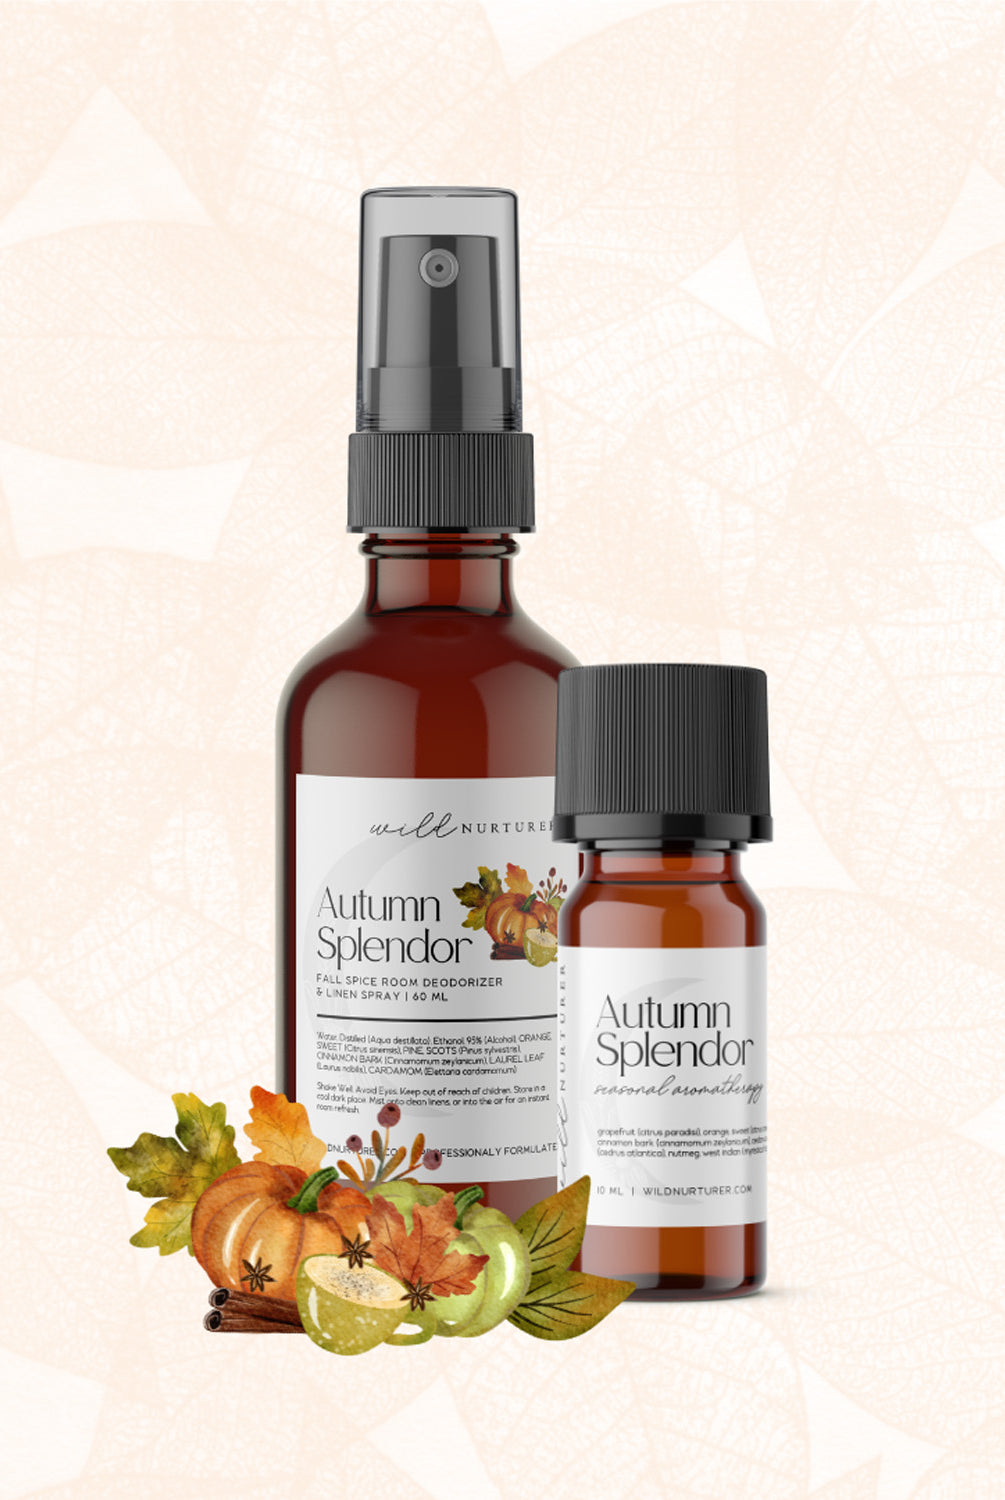 Two Autumn Splendor Wild Nurturer Aromatherapy products, a spray bottle and a smaller essential oil bottle, with a decorative autumn leaf and pumpkin design below them.